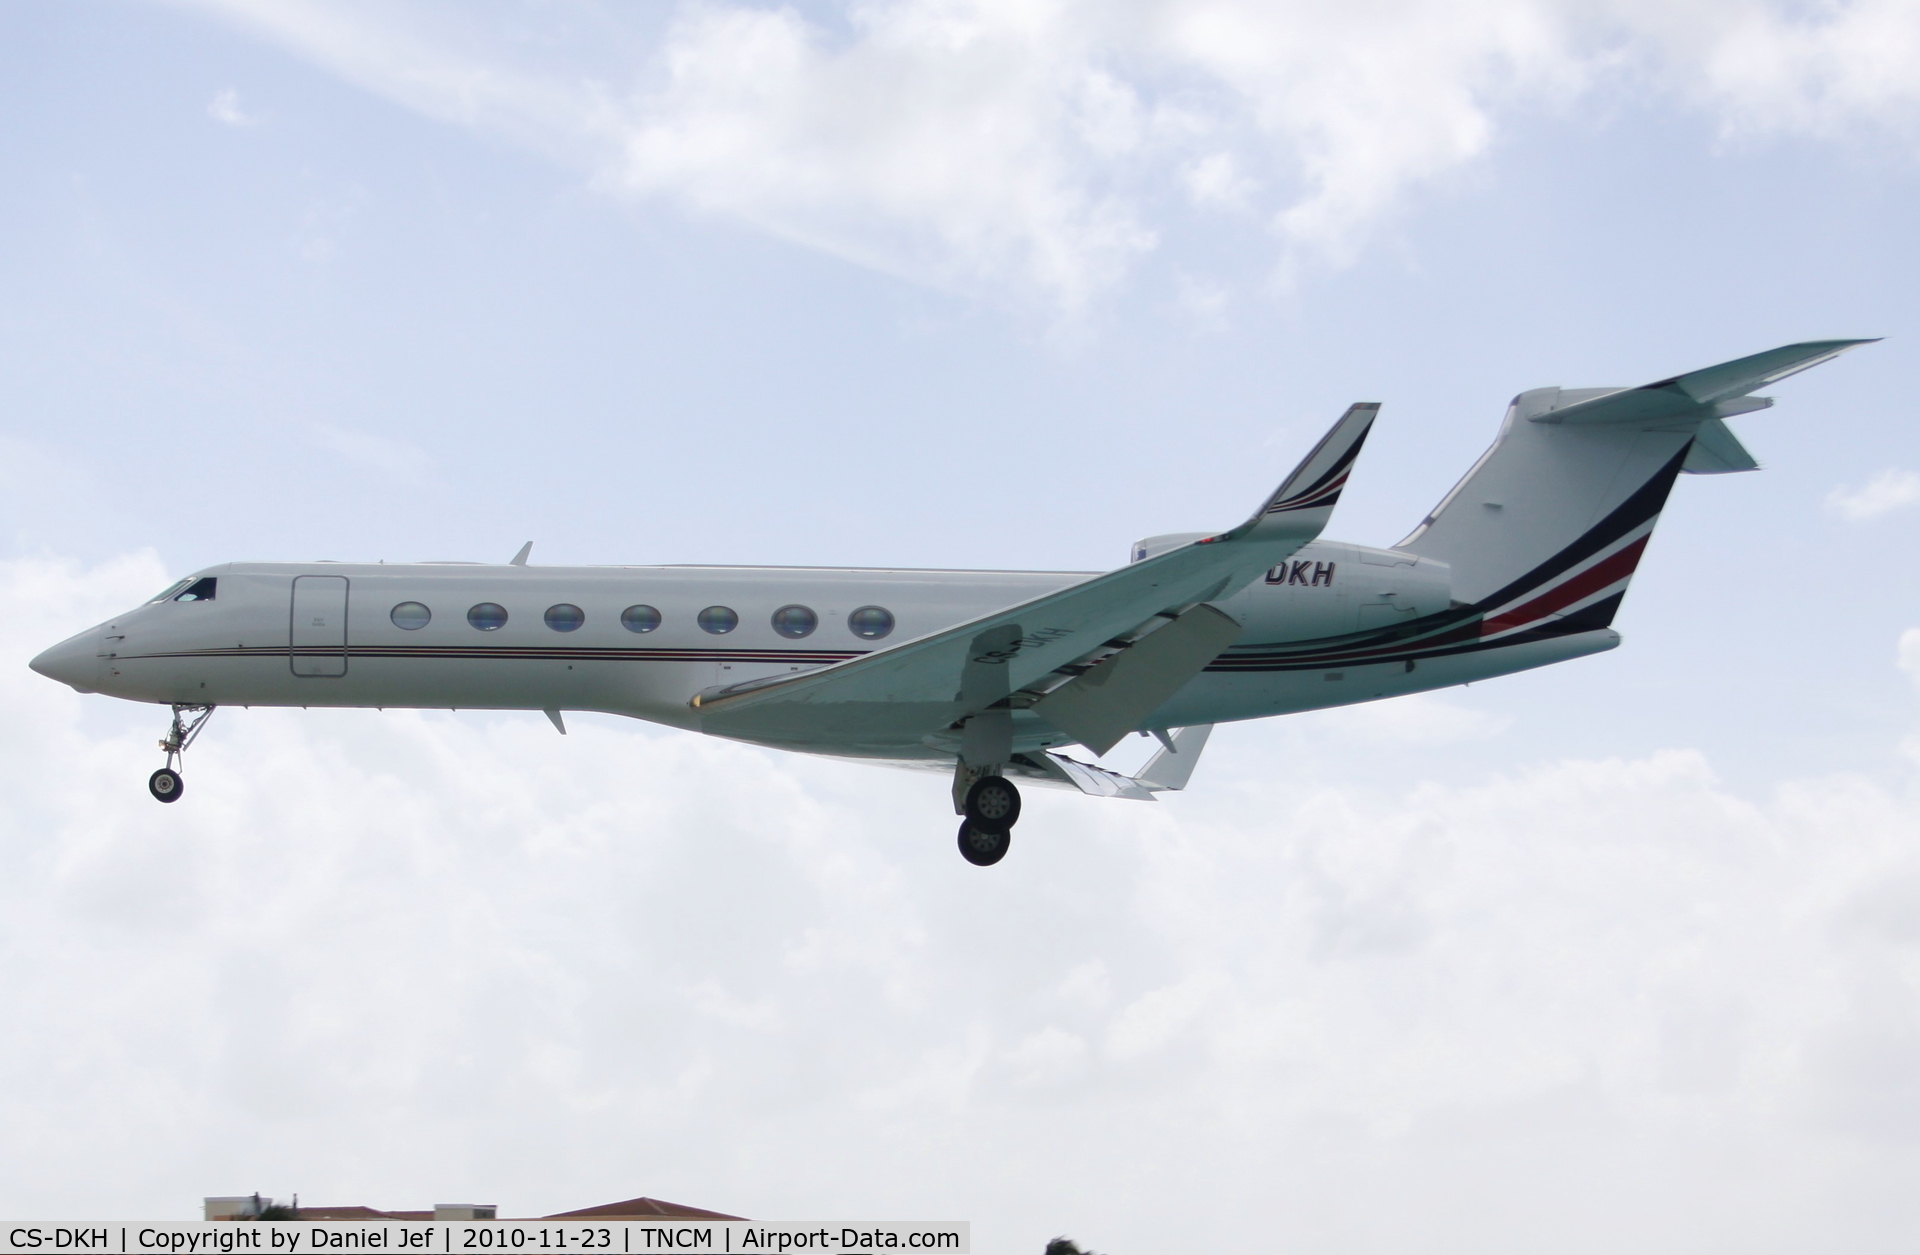 CS-DKH, 2007 Gulfstream Aerospace GV-SP (G550) C/N 5150, CS-DKH landing at TNCM